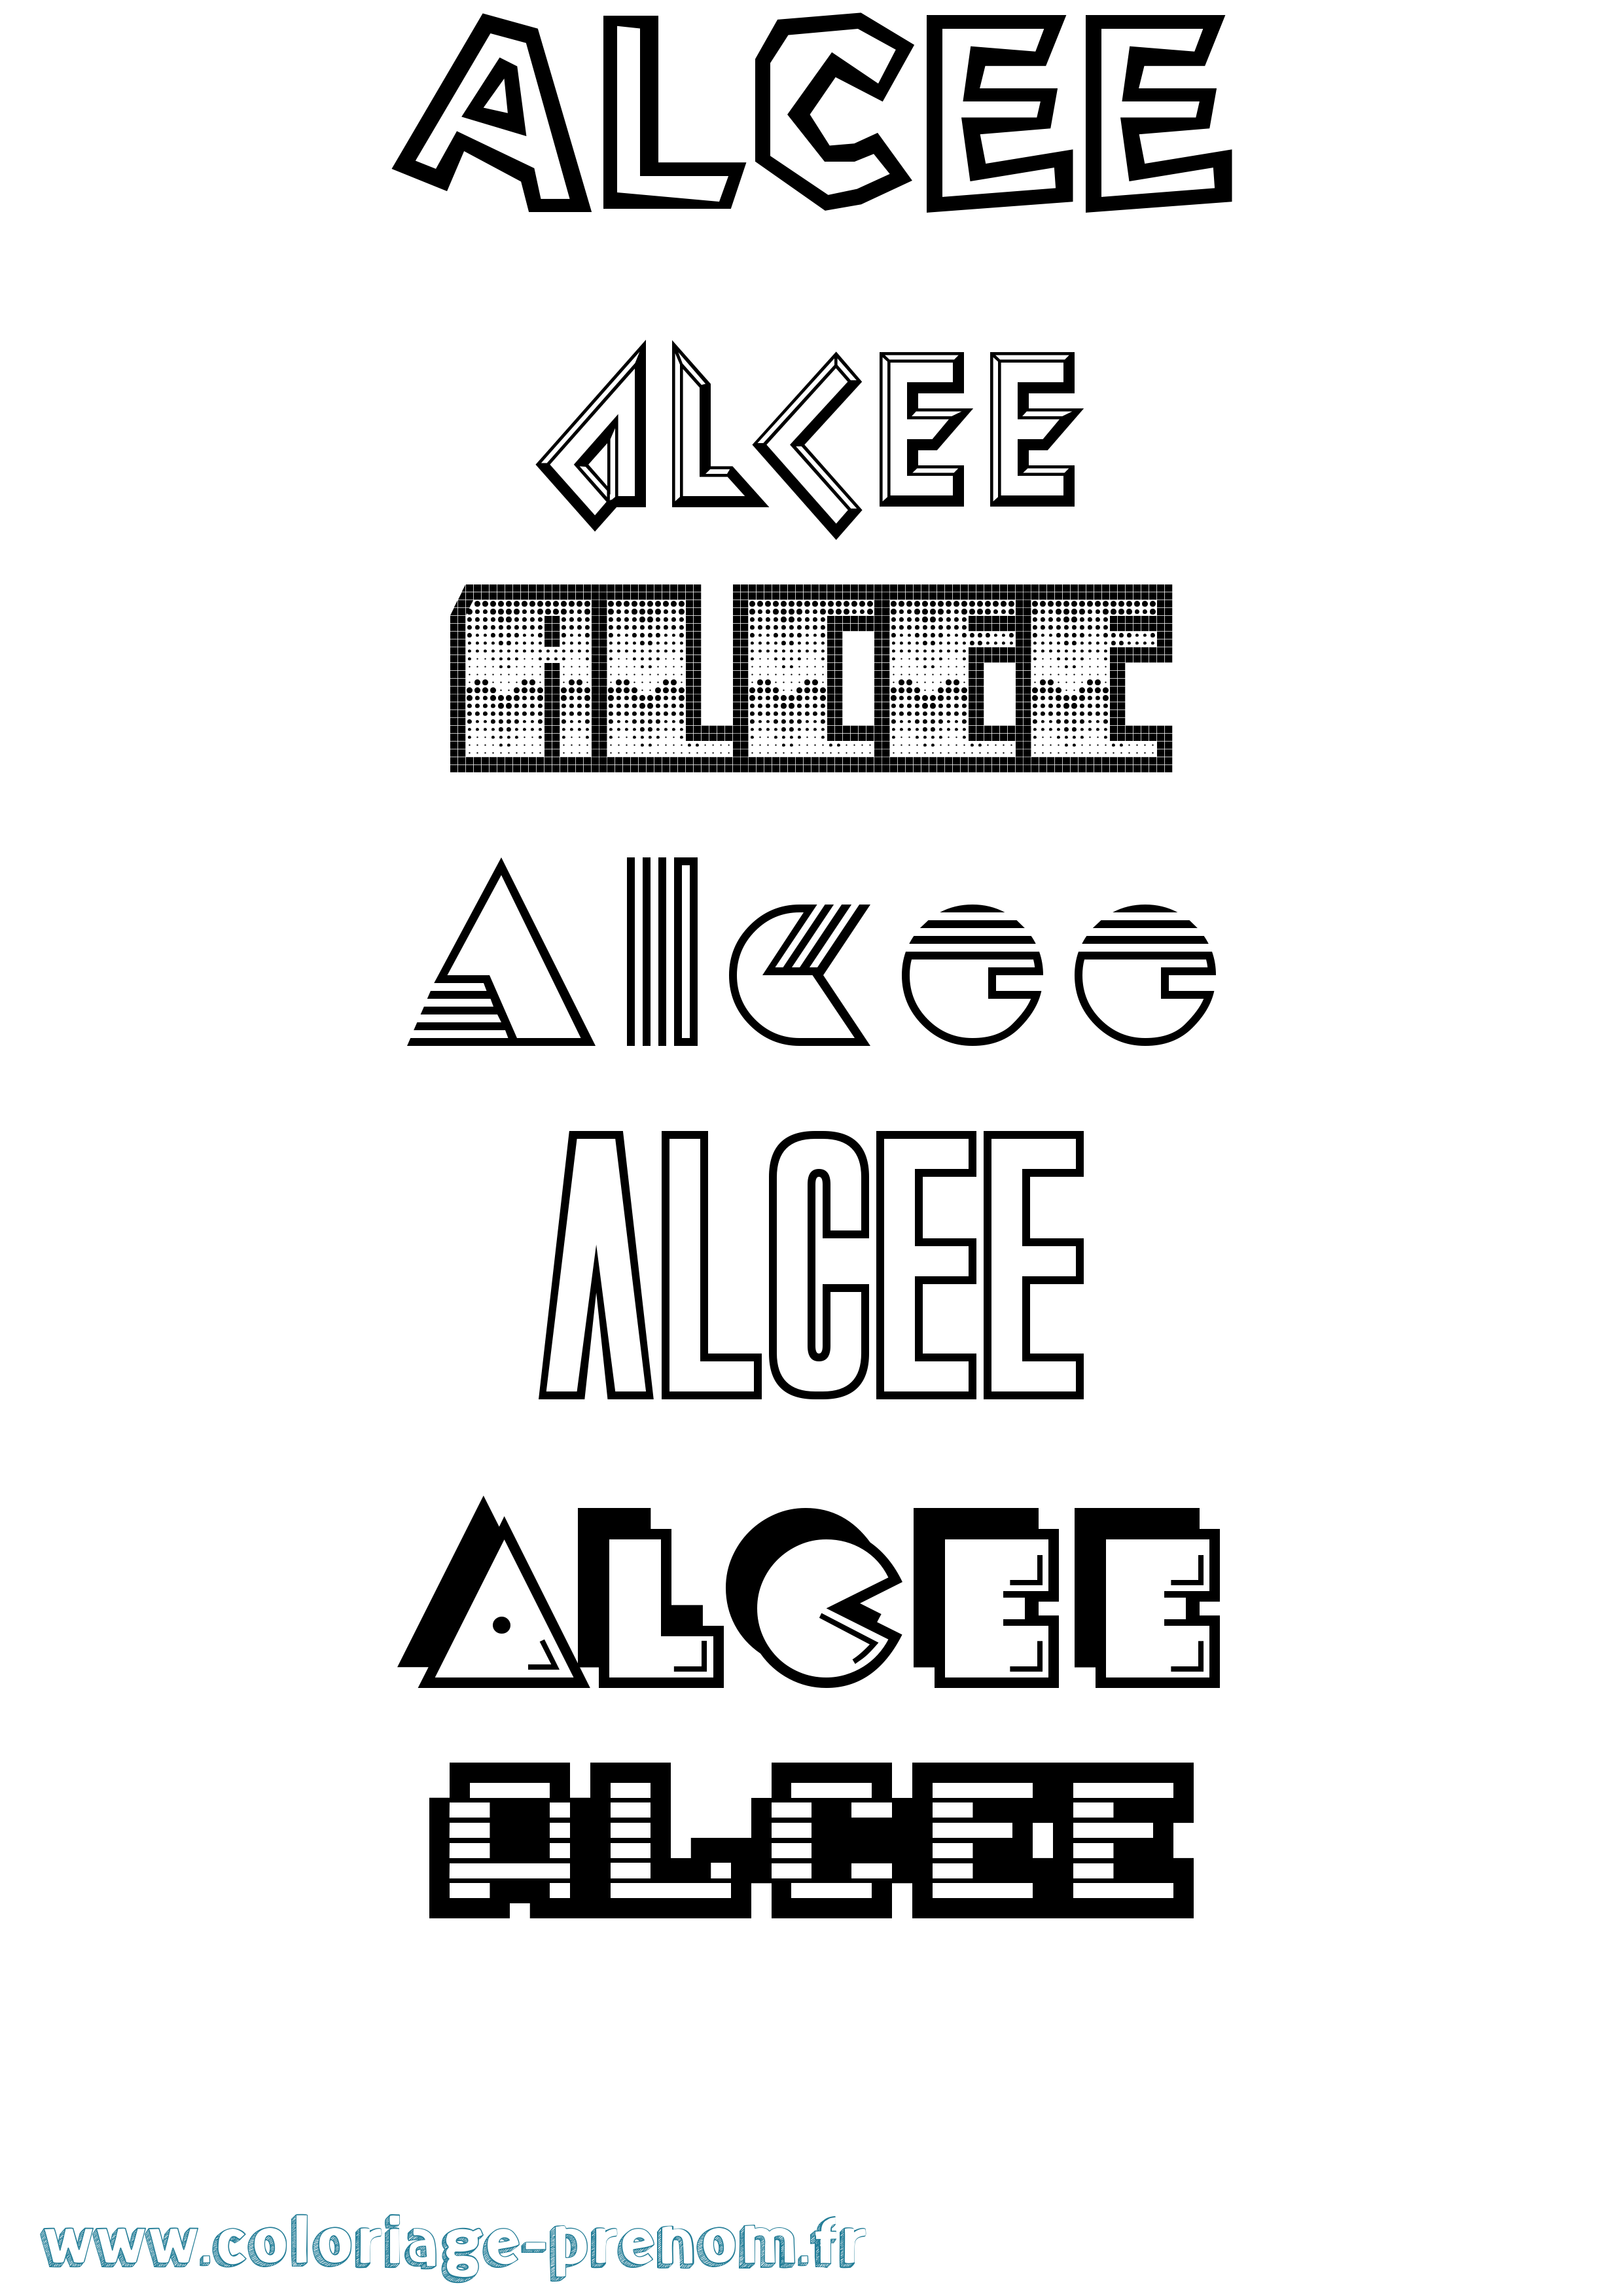 Coloriage prénom Alcee Jeux Vidéos